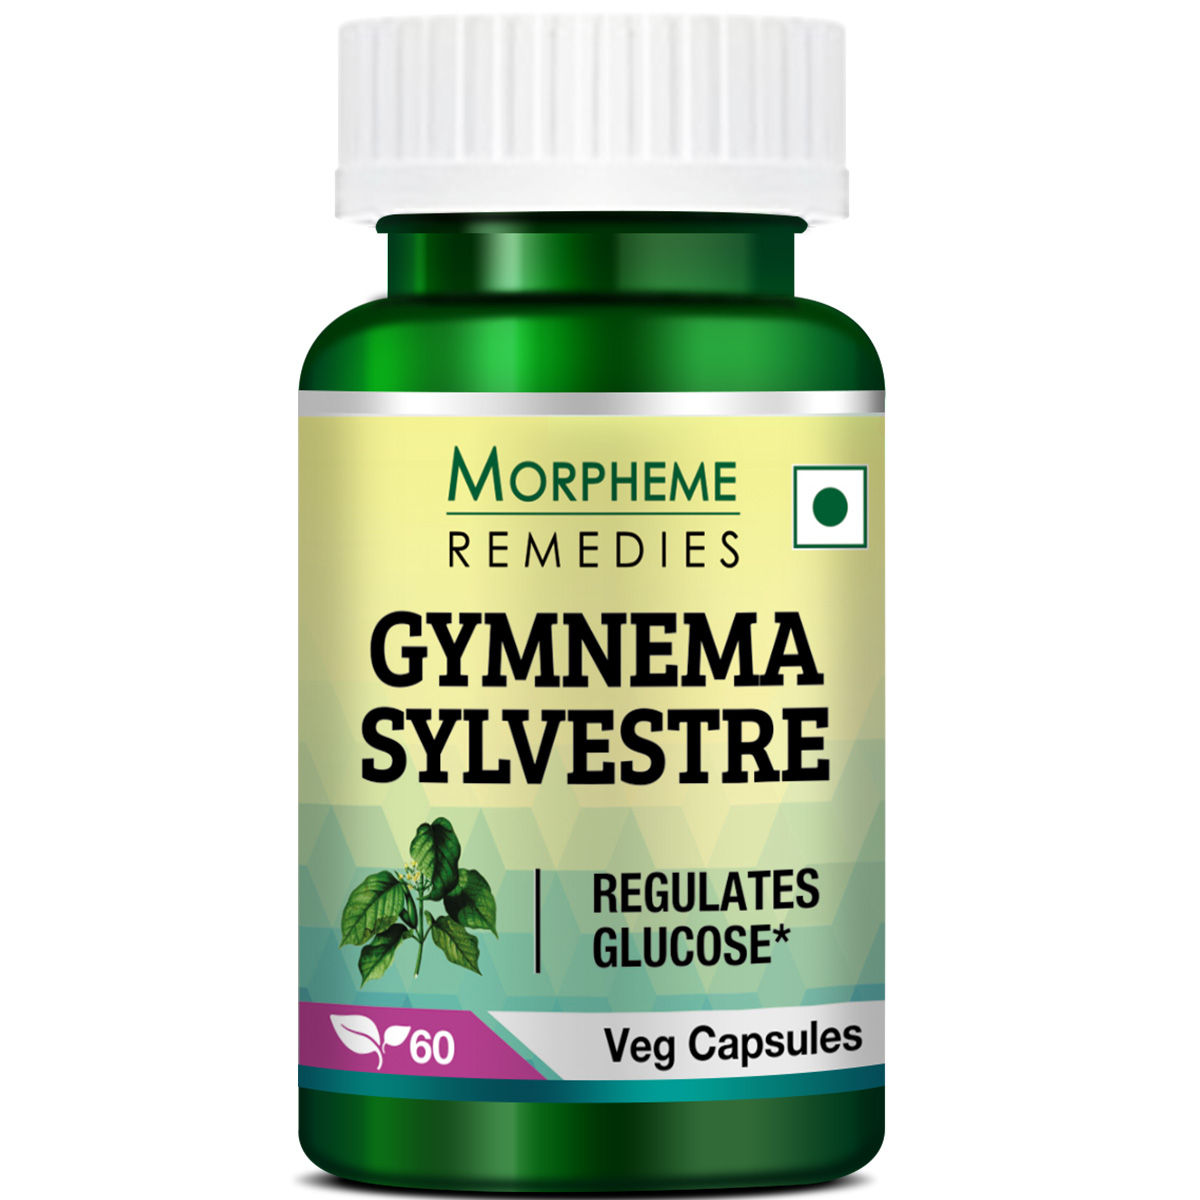 Morpheme Remediess Gymnema Slyvestre (Meshshringi) - Regulates Glucose - 500mg Extract